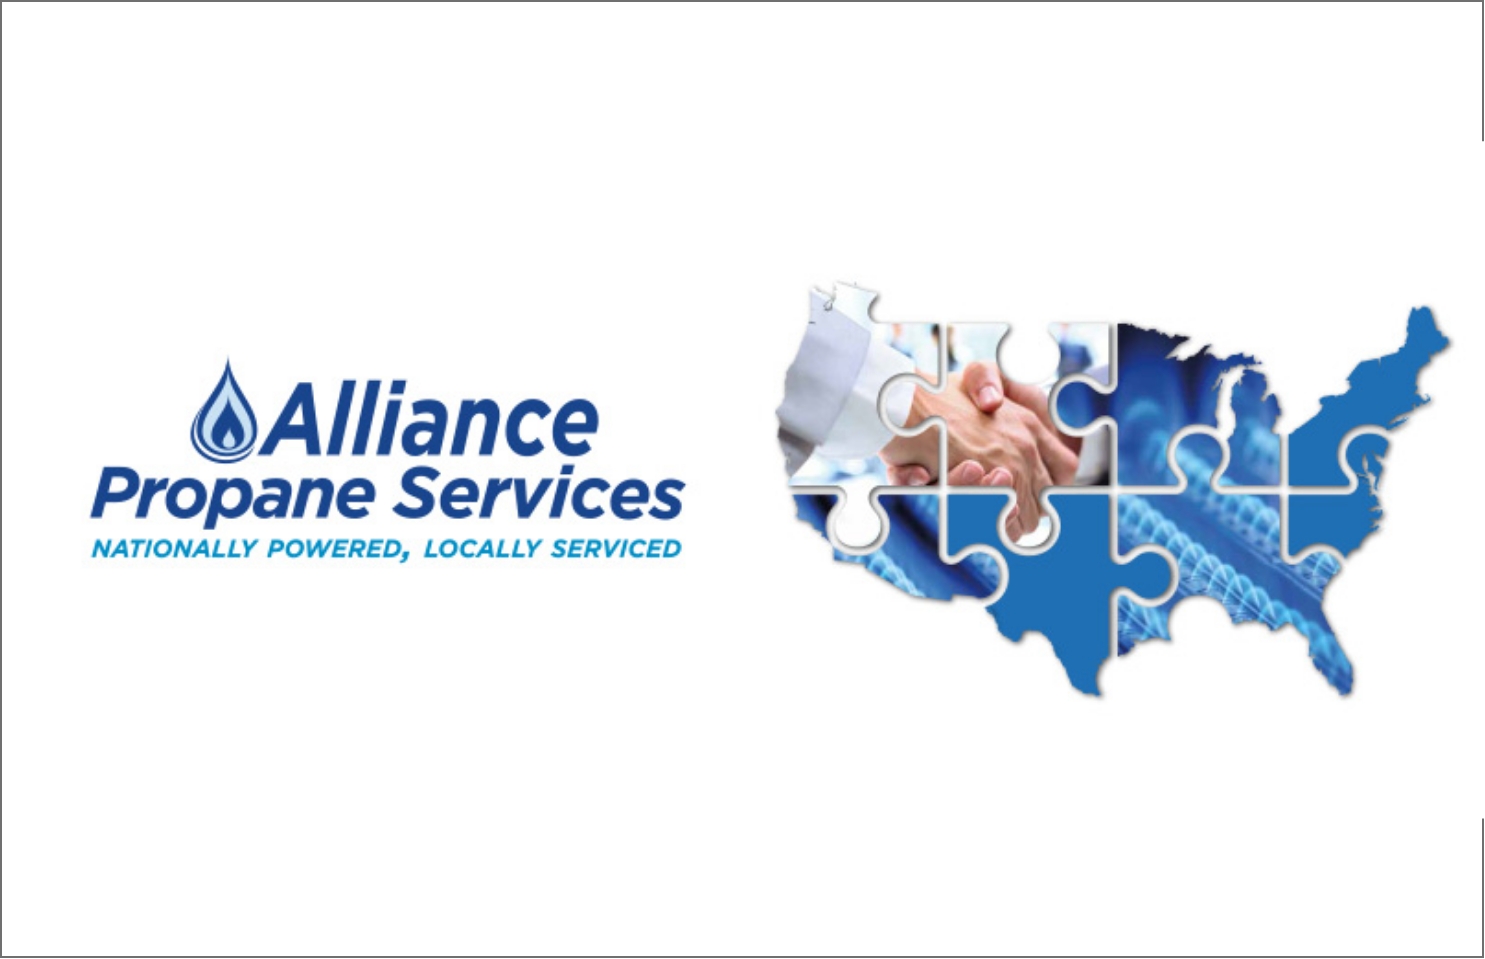 Alliance Propane Services